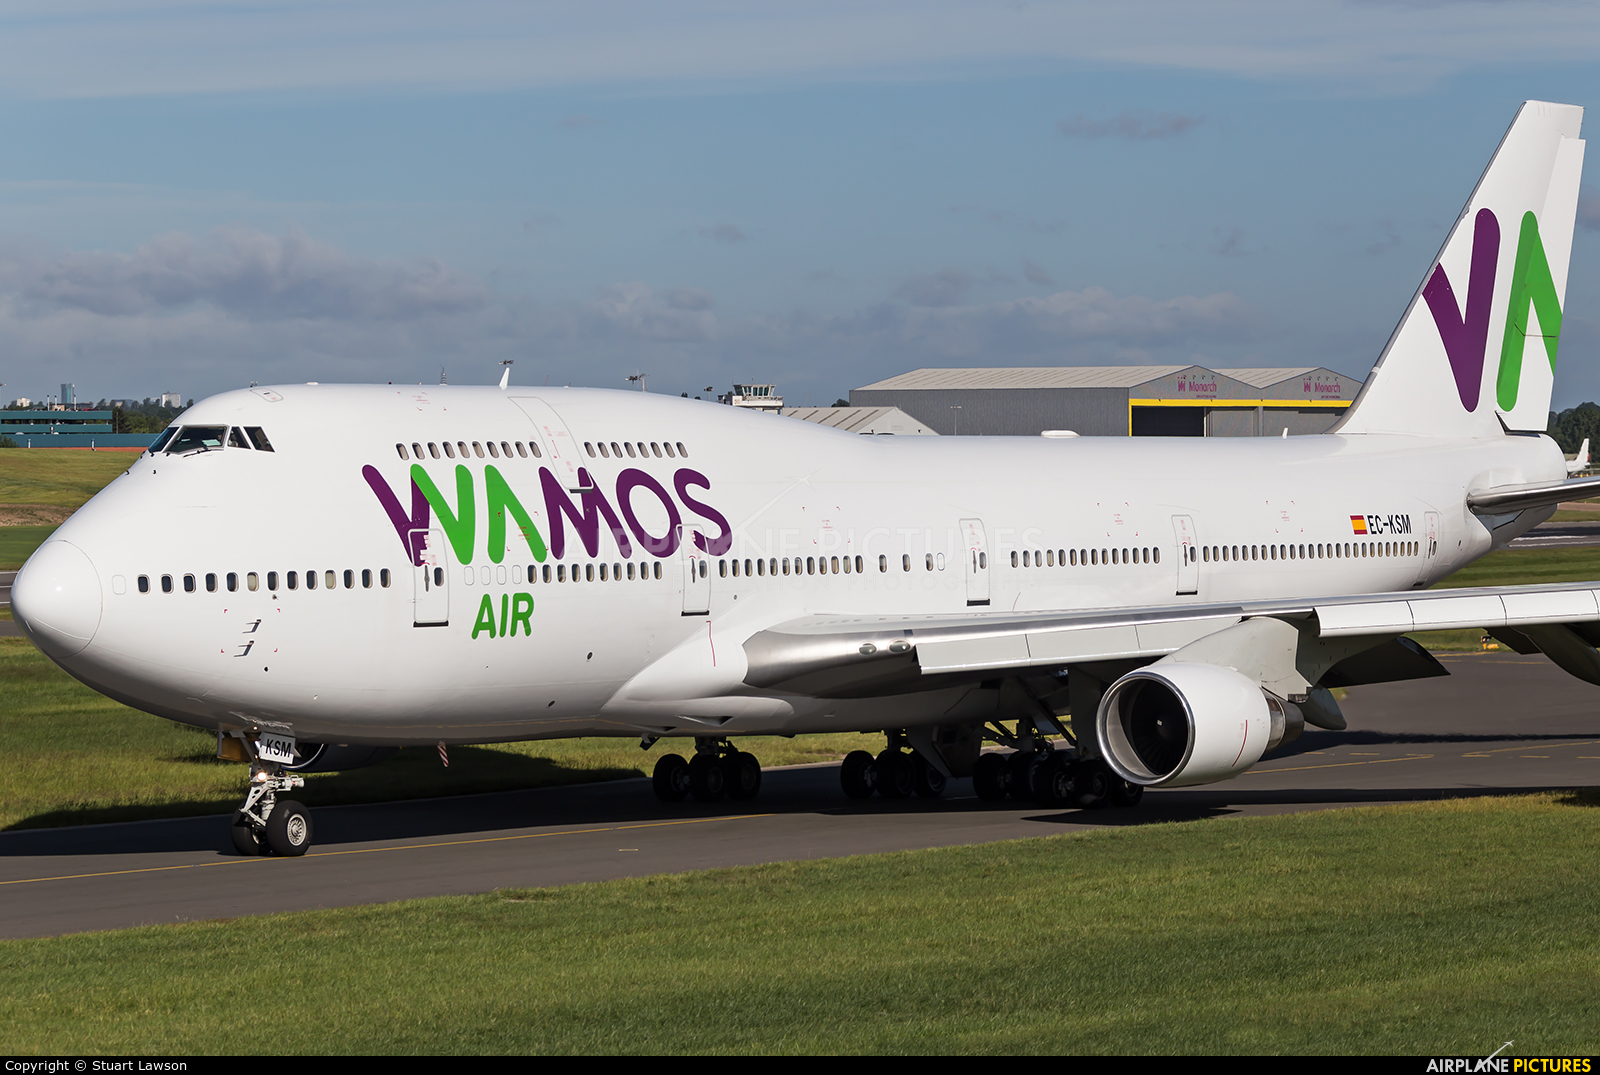  Wamos Air restarts Madrid-Guatemala flights with stops in Varadero